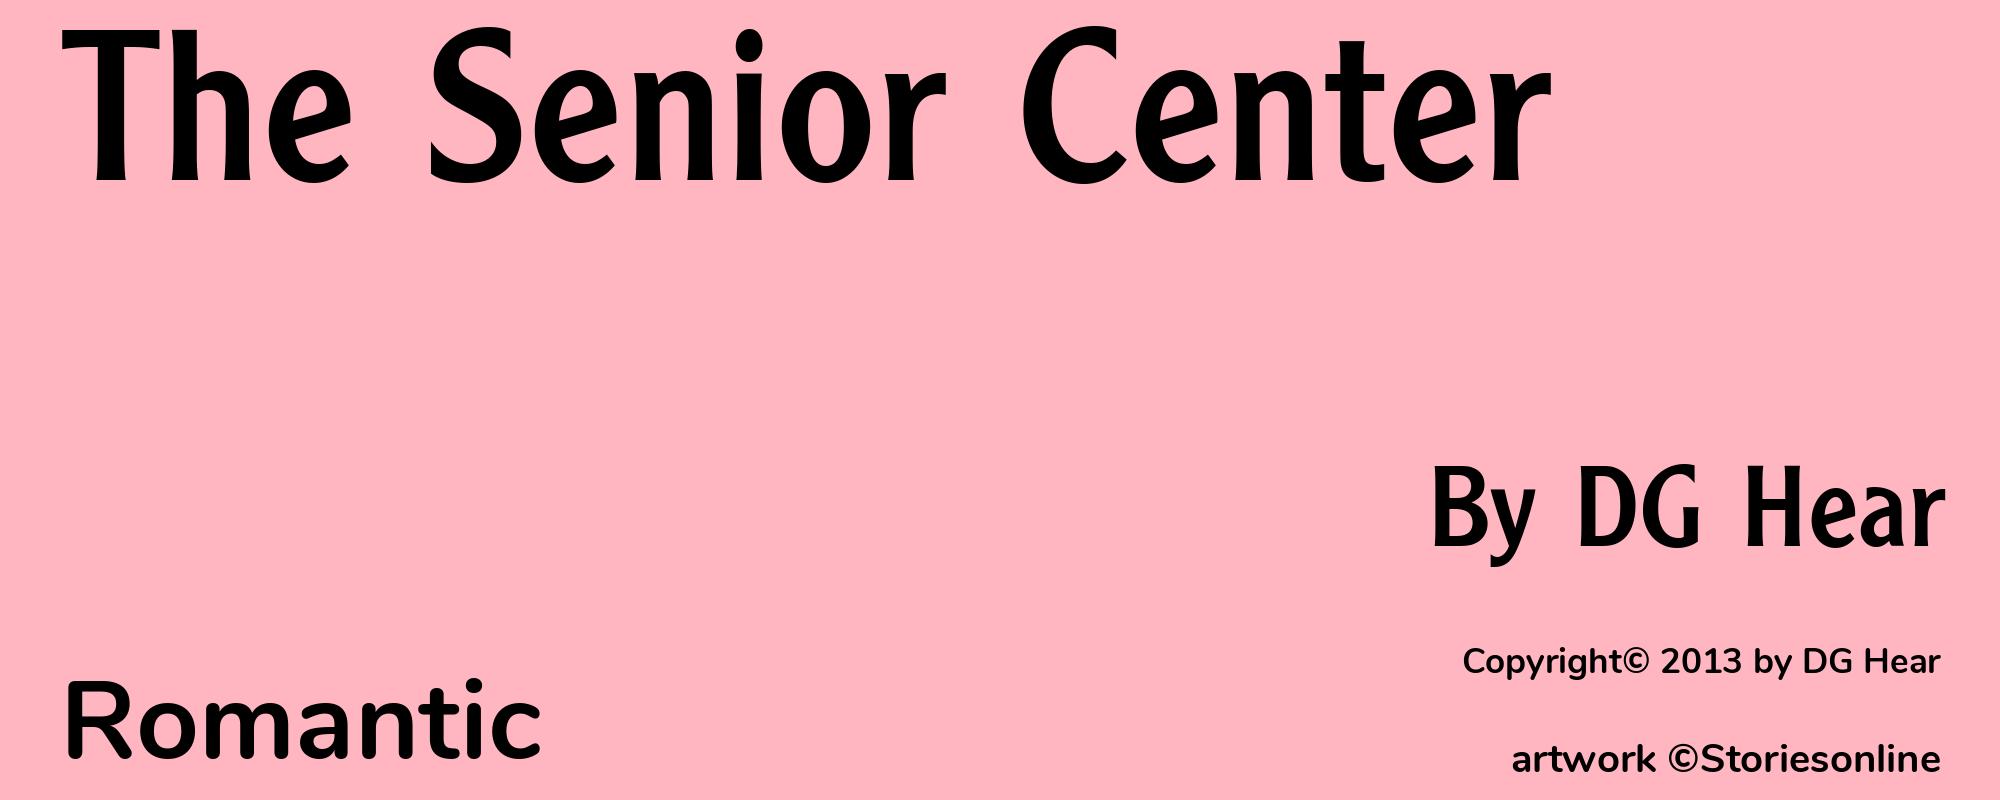 The Senior Center - Cover